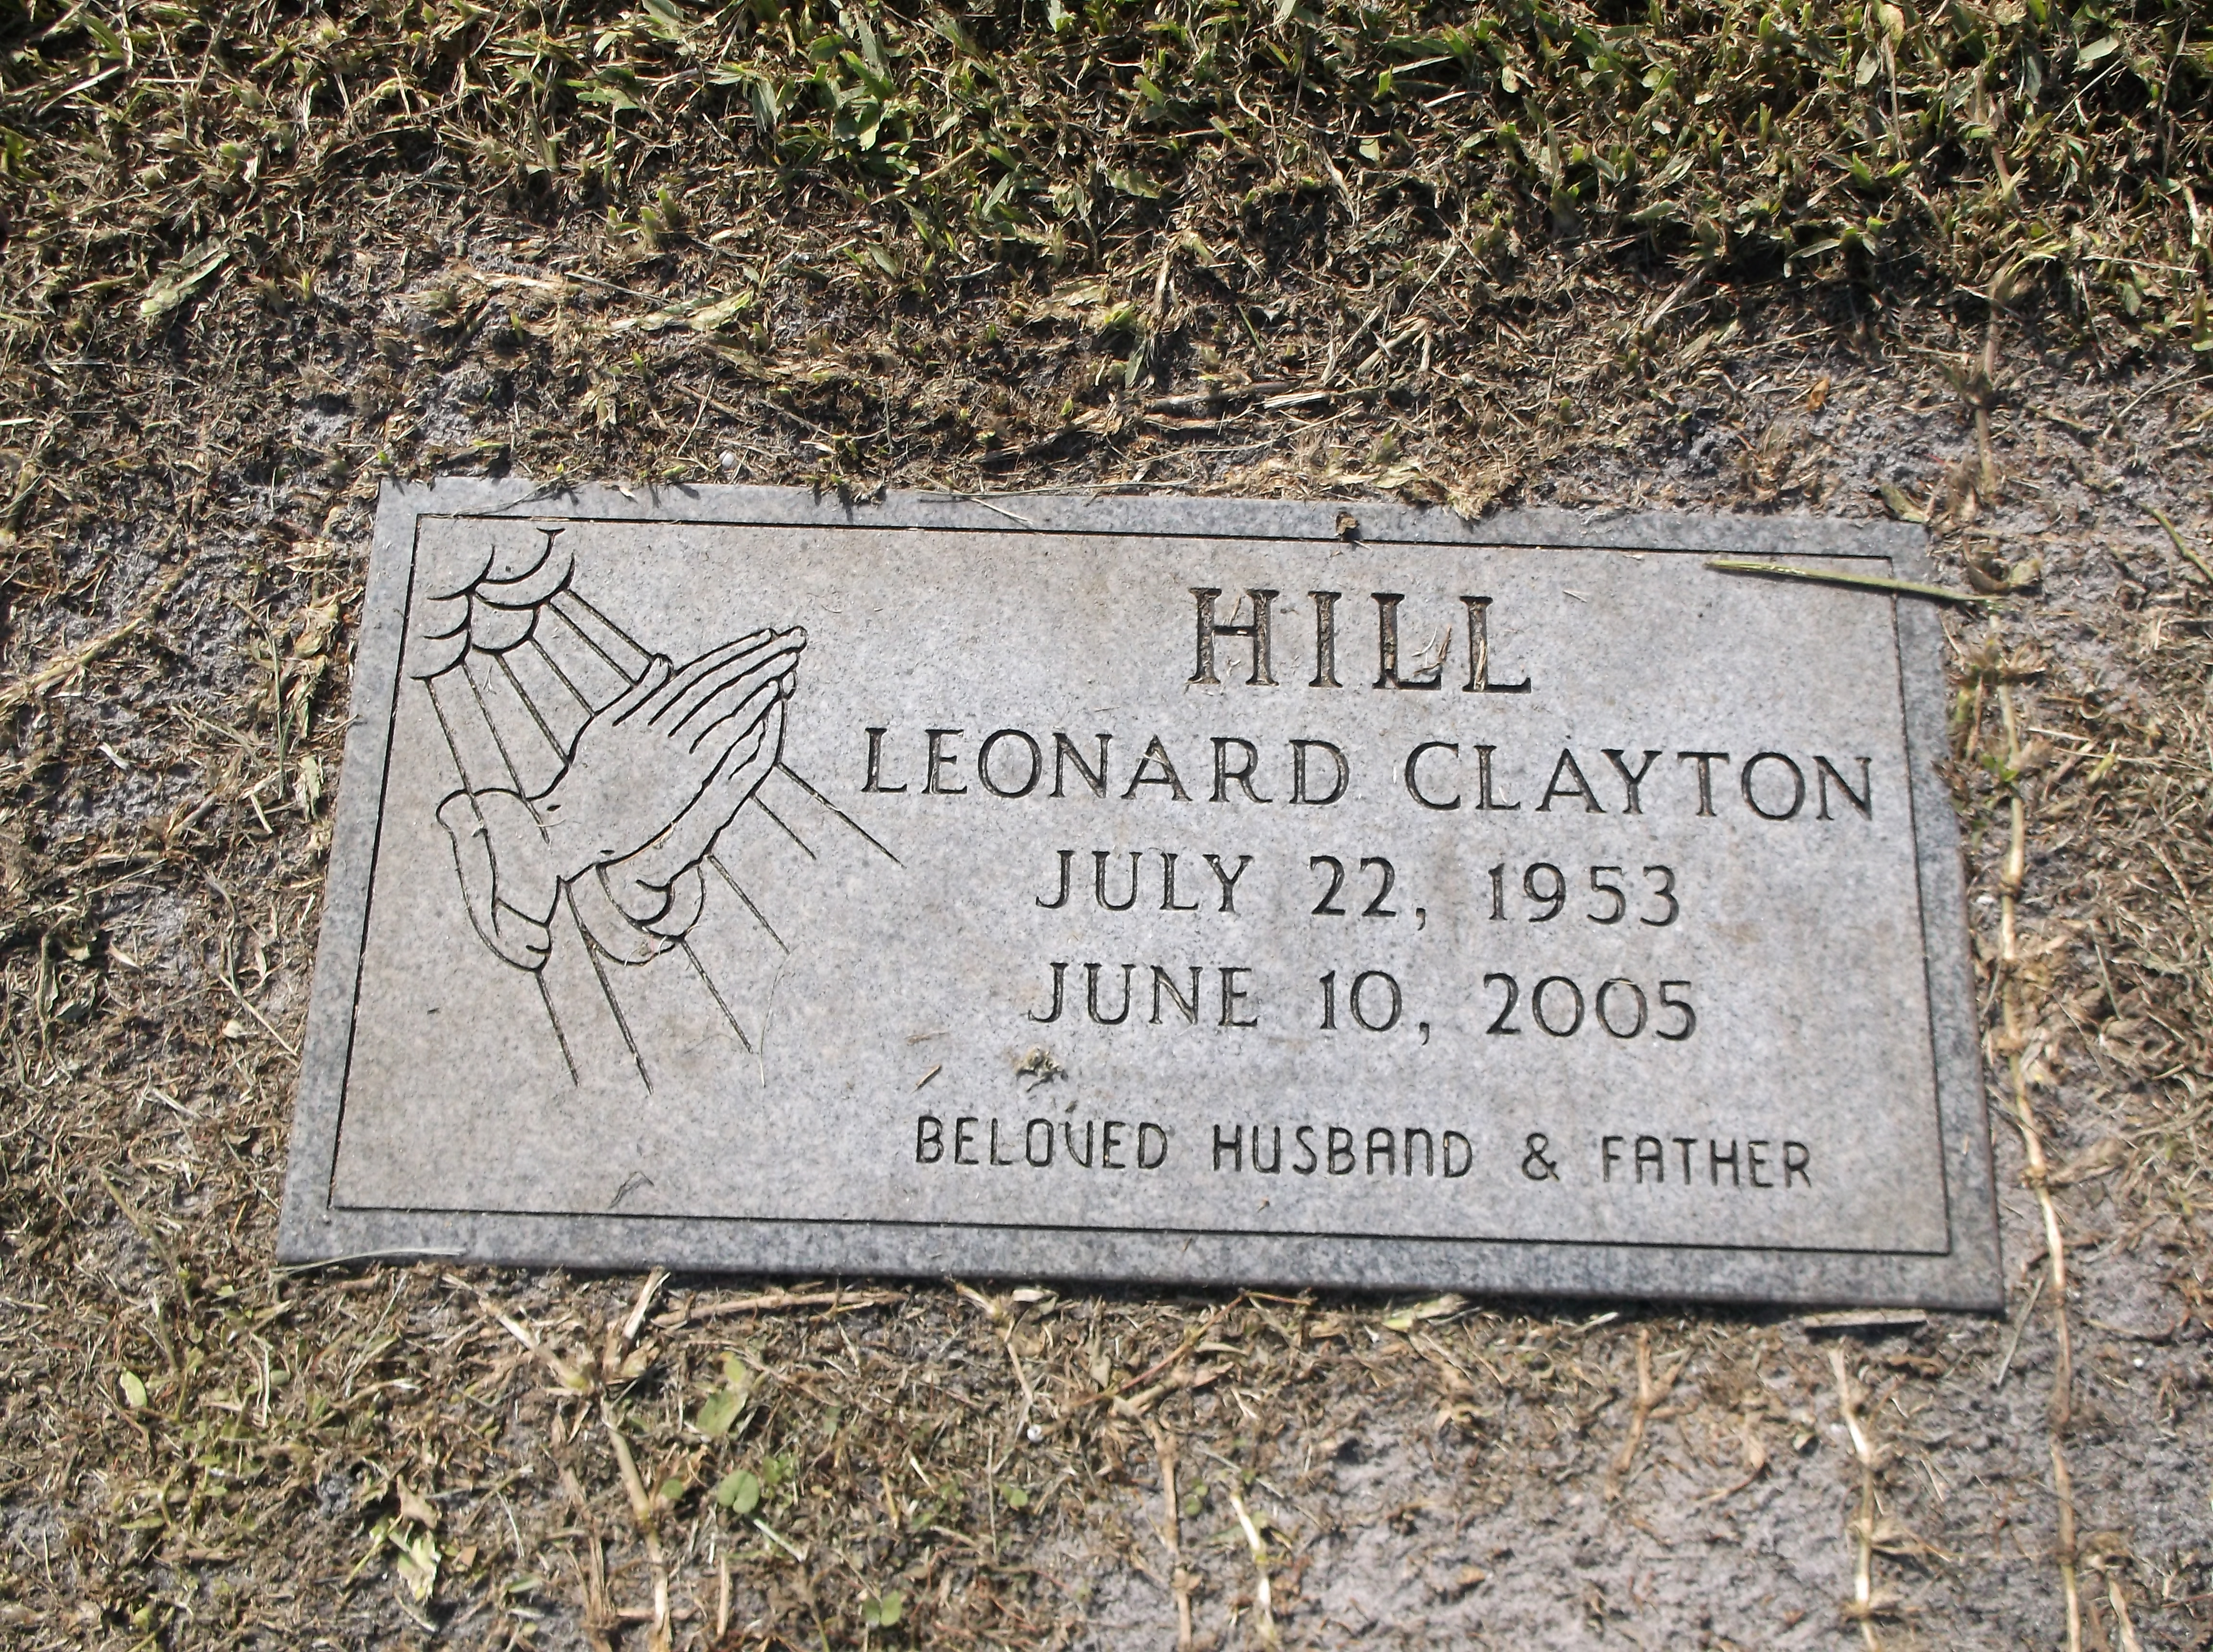 Leonard Clayton Hill